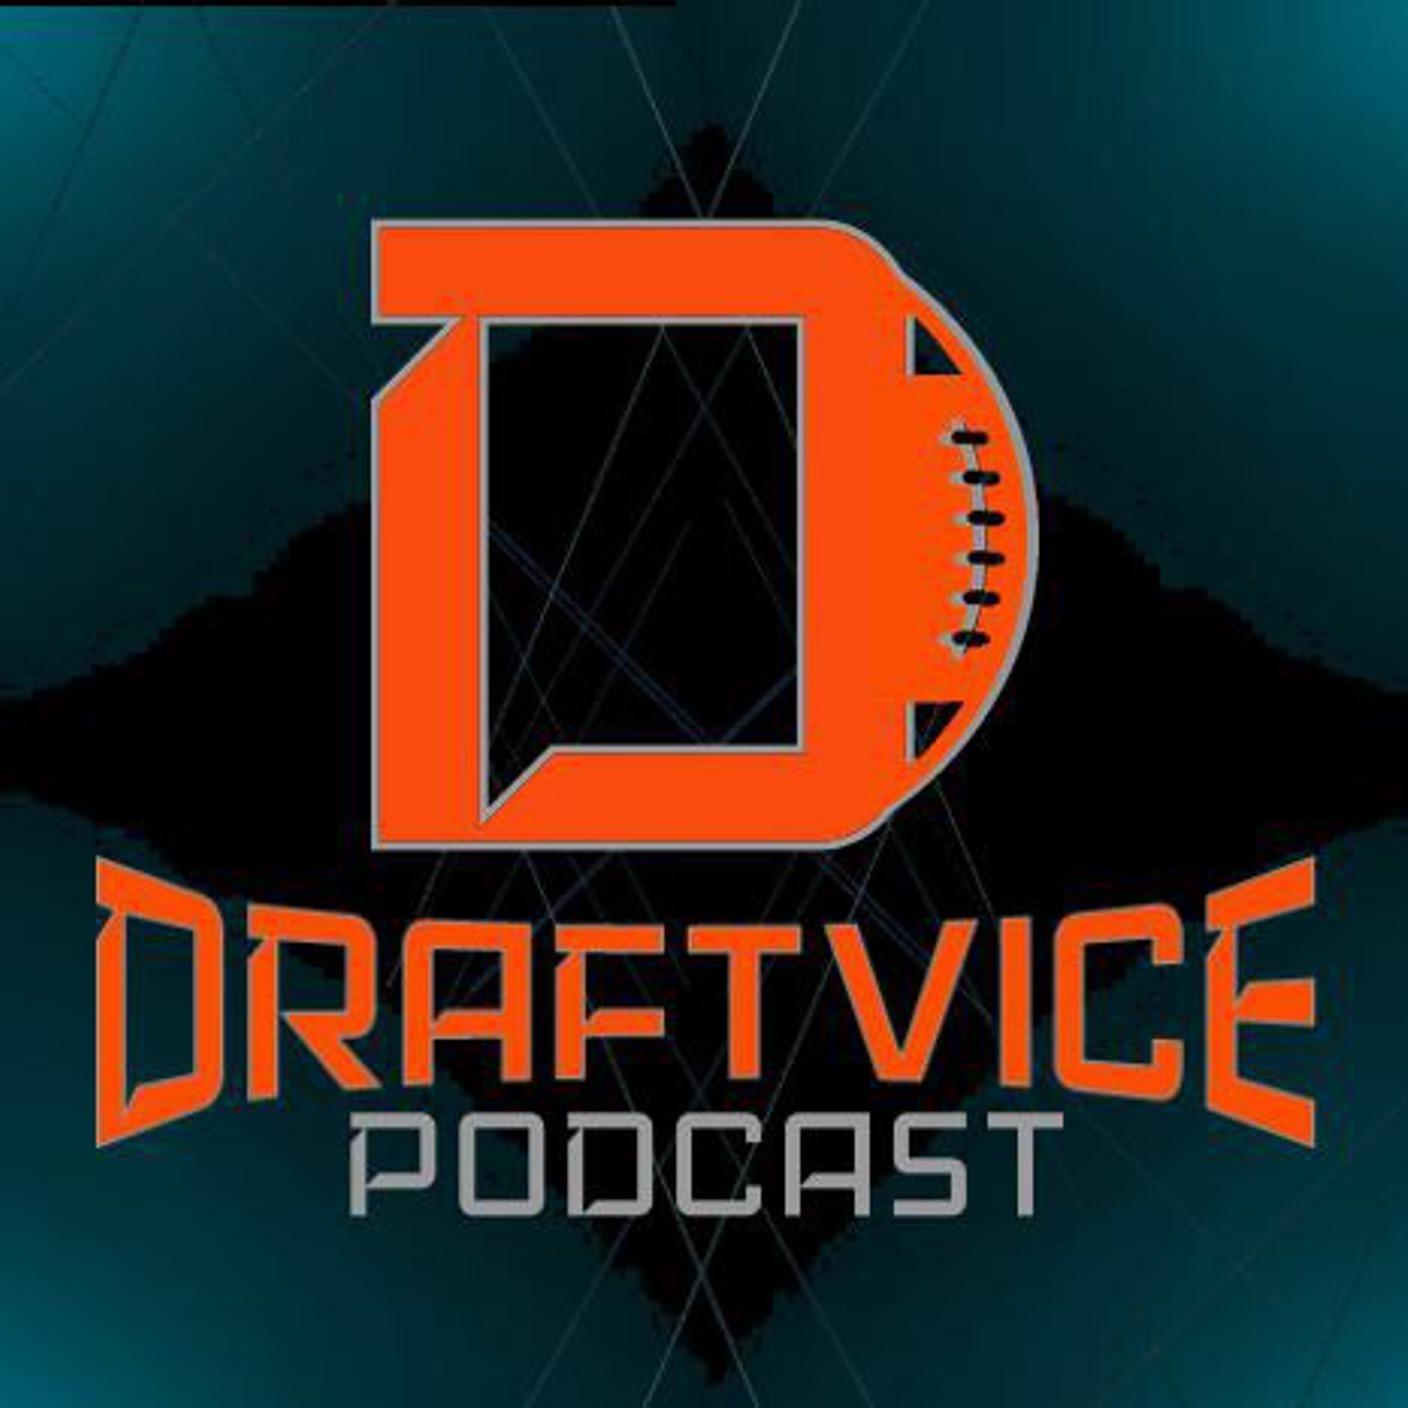 Draftvice-Football Podcast- News/Analysis surrounding Fantasy Football and the NFL Draft